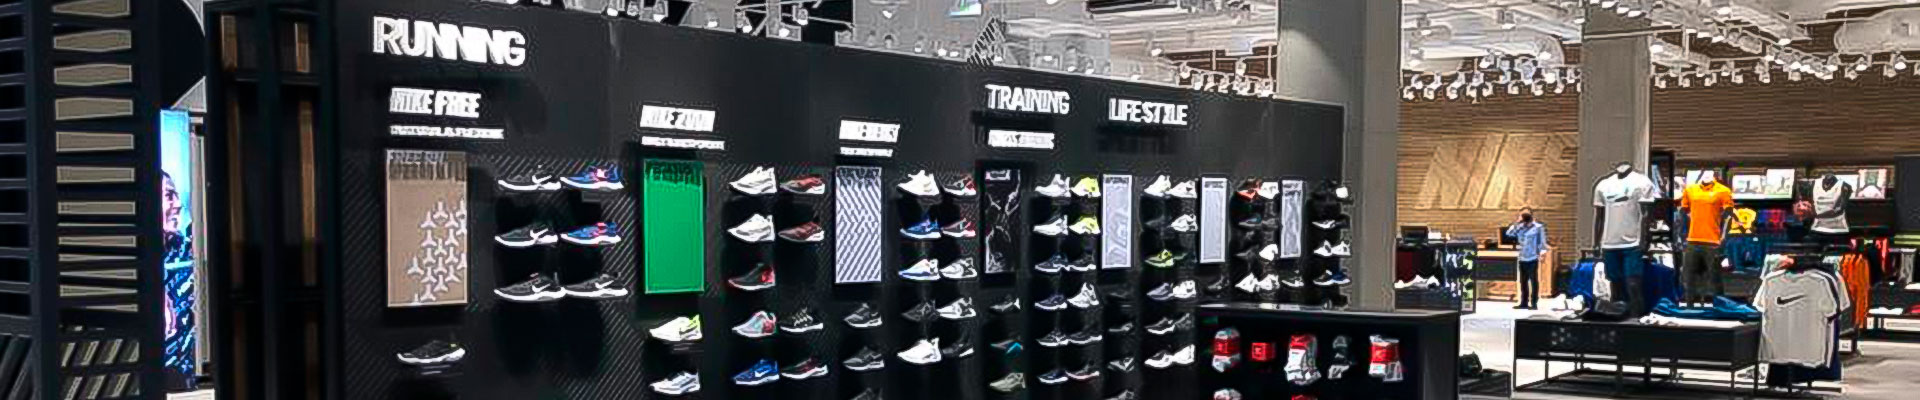 Agglotech terrazzo for Nike’s new Cairo stores - Agglotech ...